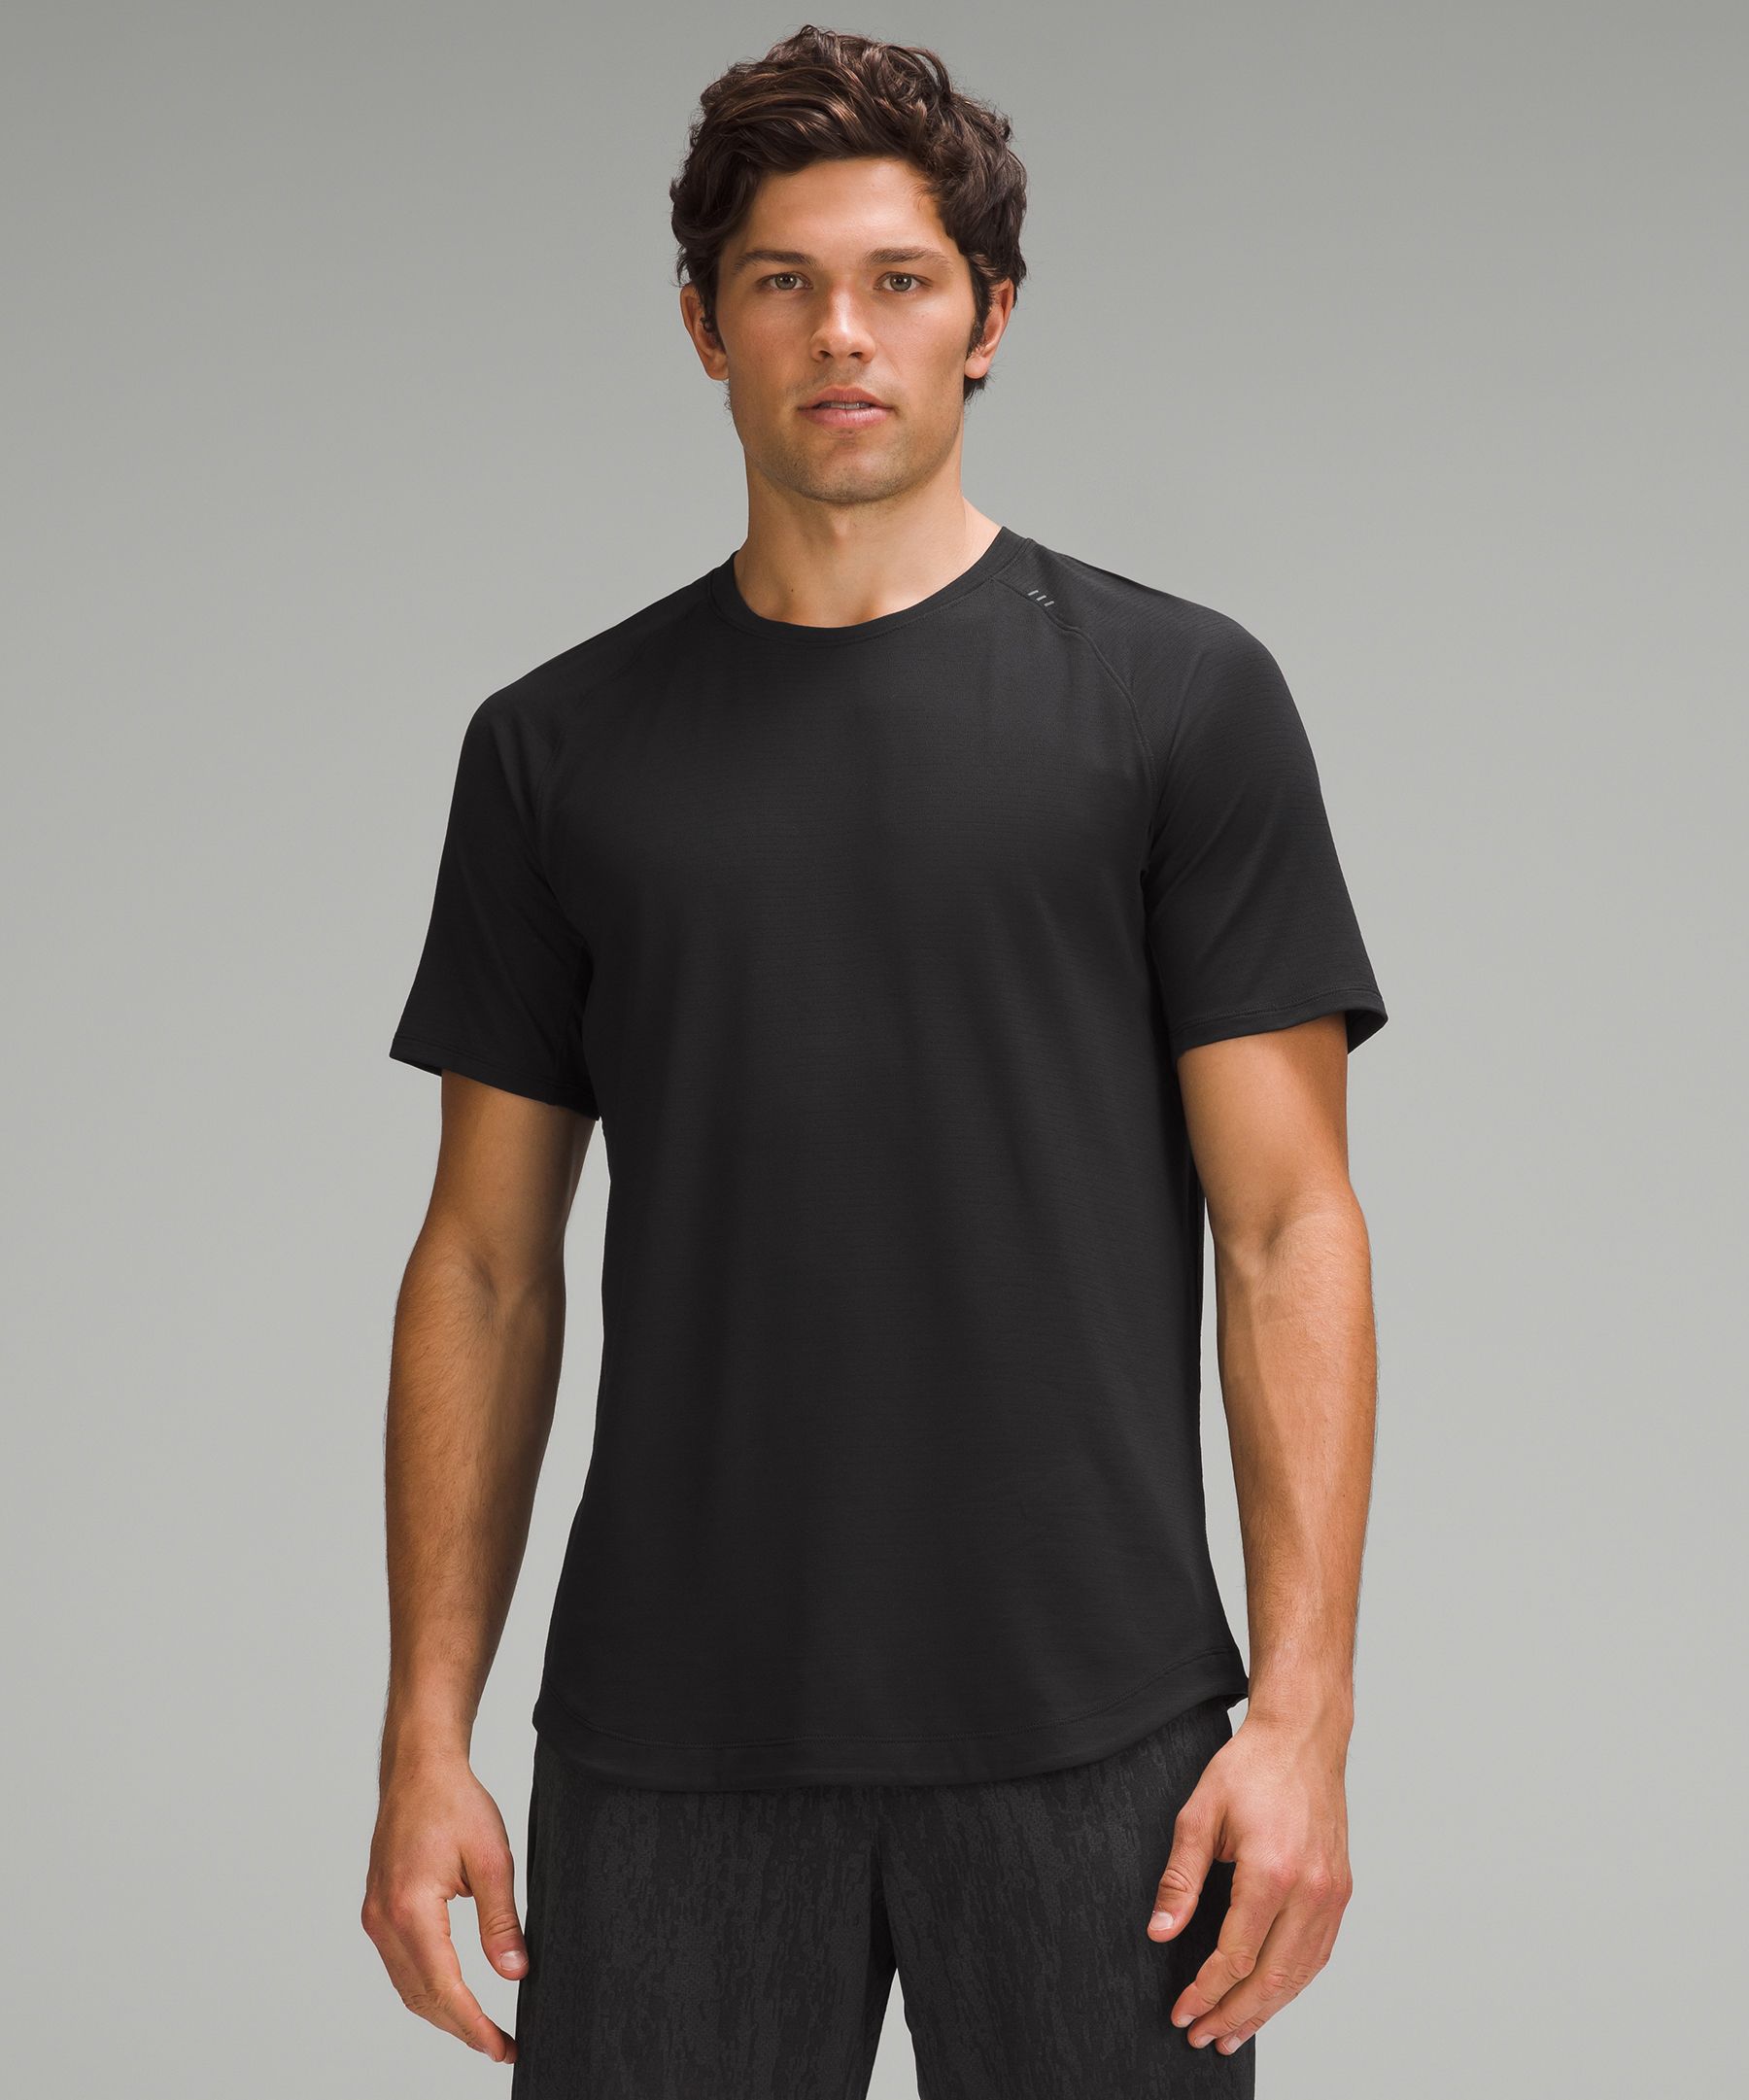 Lululemon athletica Evolution Short-Sleeve Polo Shirt *Oxford, Men's Short  Sleeve Shirts & Tee's